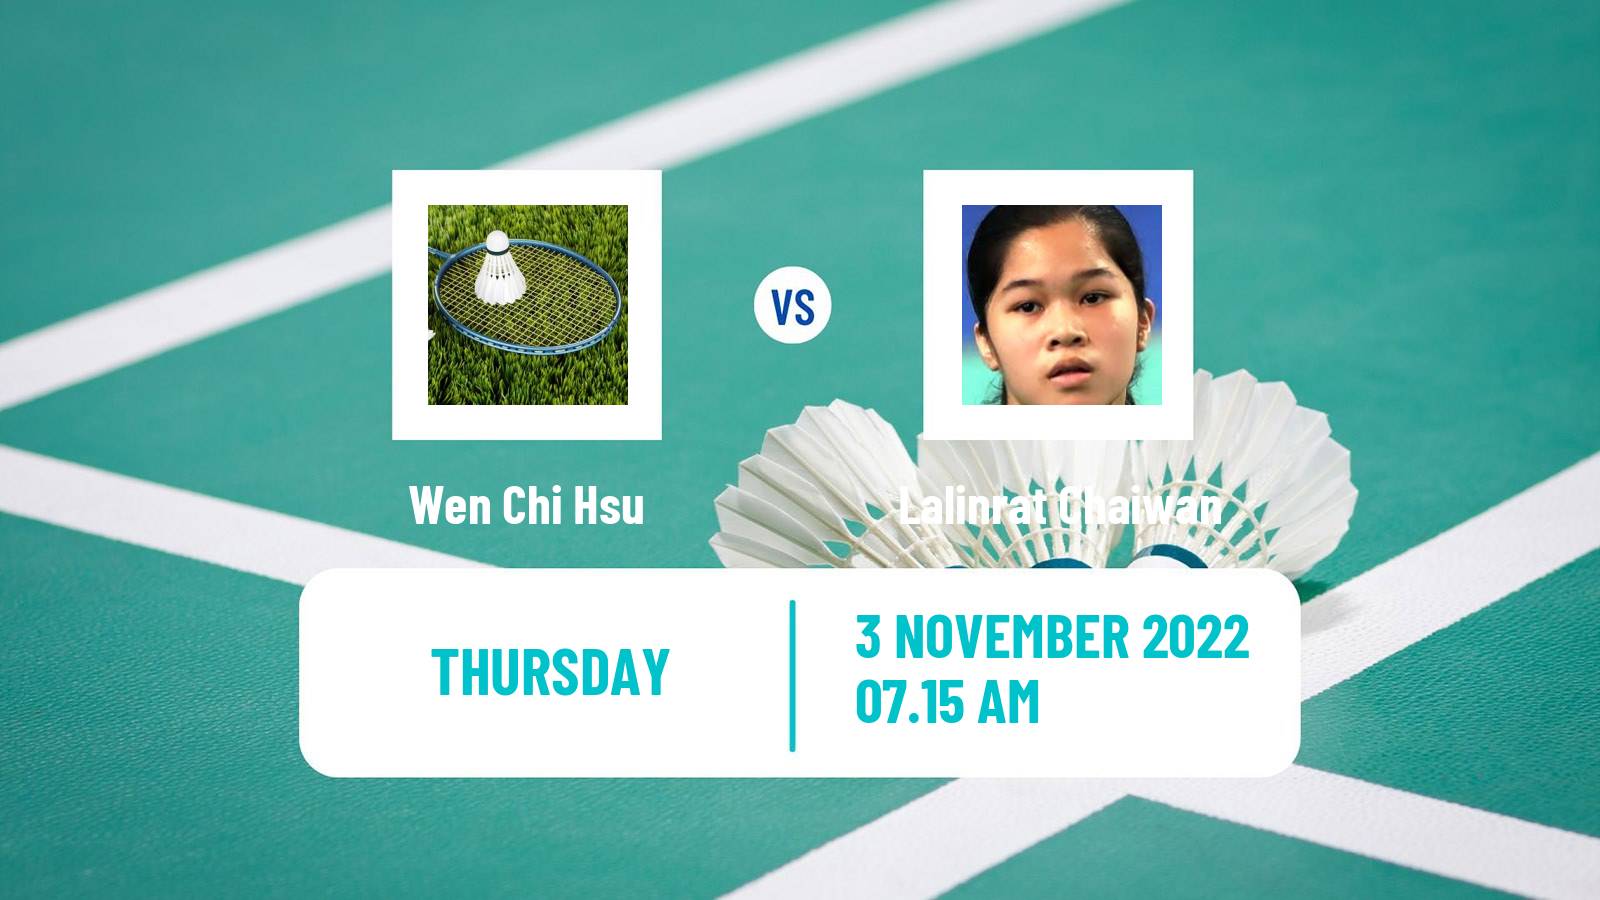 Badminton Badminton Wen Chi Hsu - Lalinrat Chaiwan